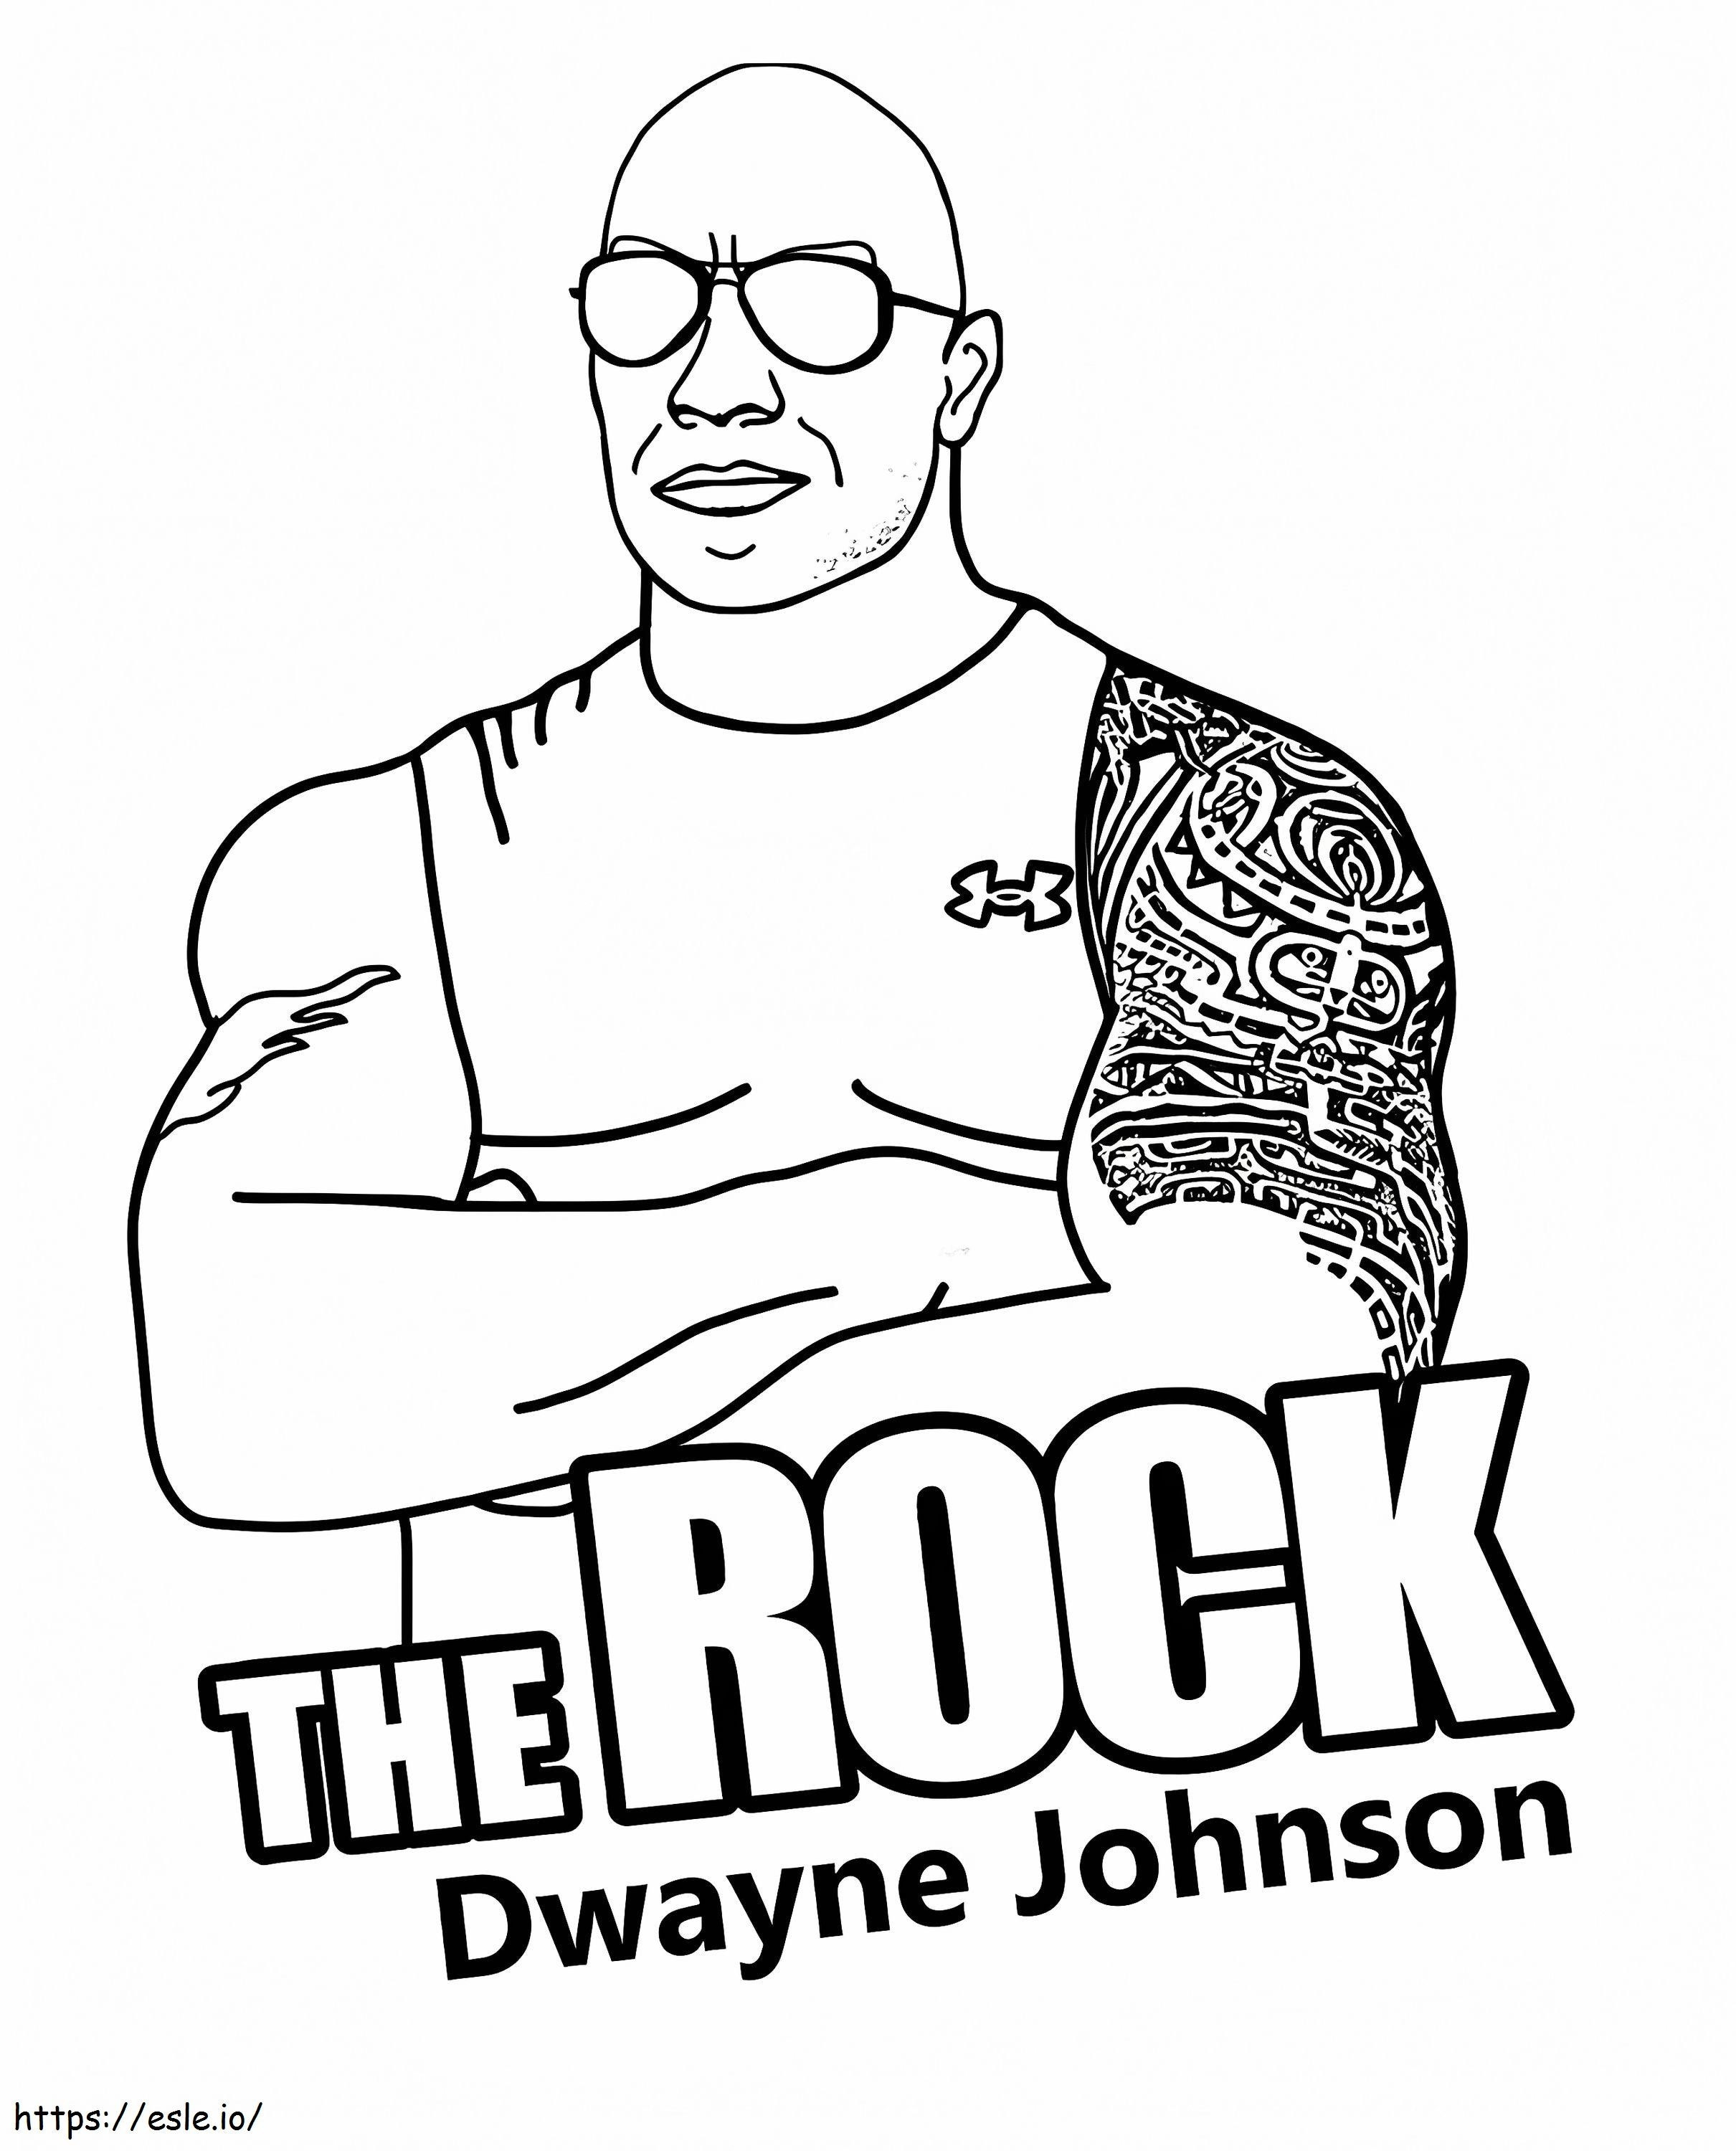 Dwayne Johnson coloring page